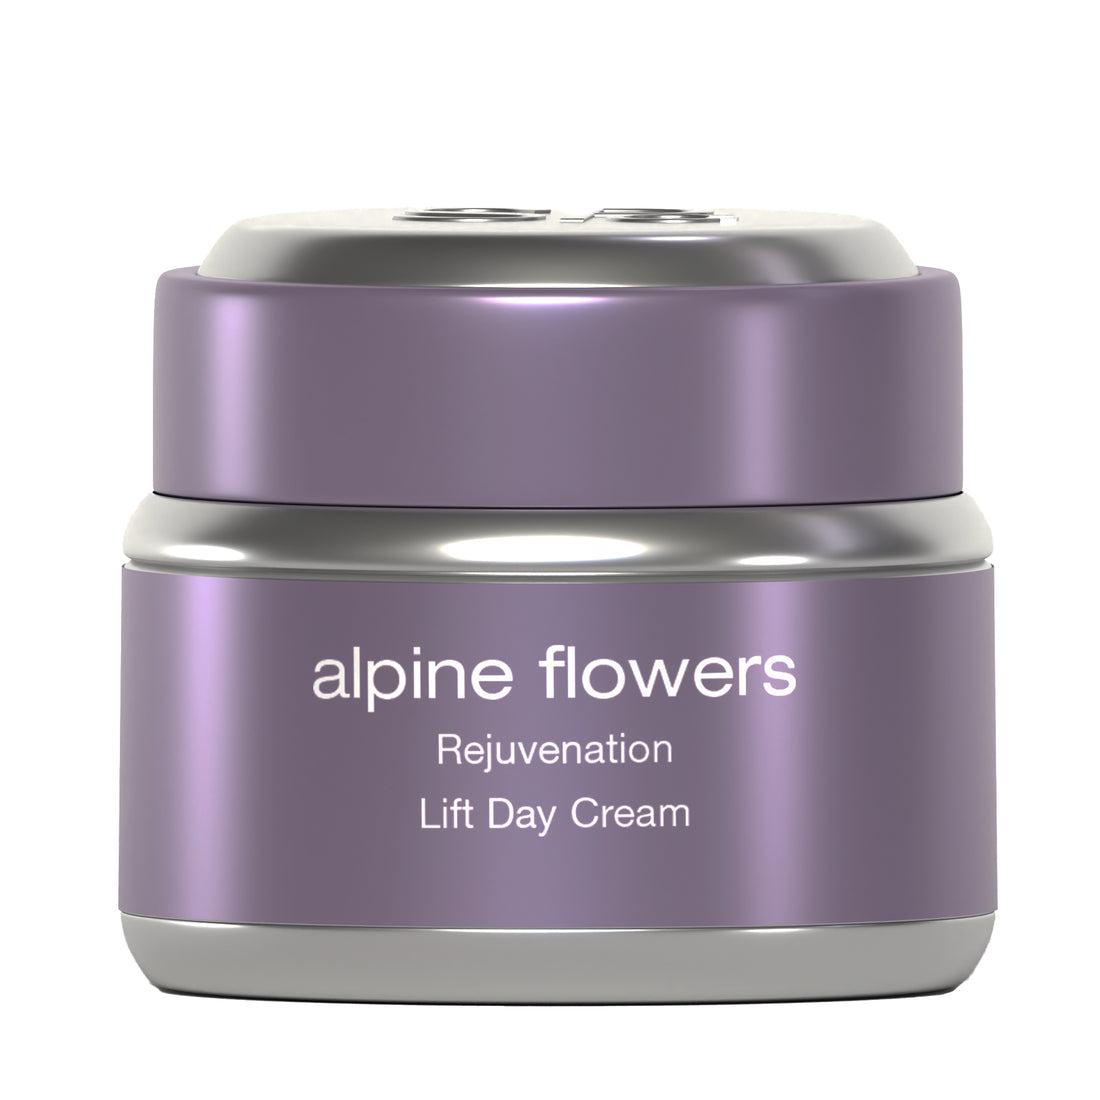 alpine flowers Lift Day Cream